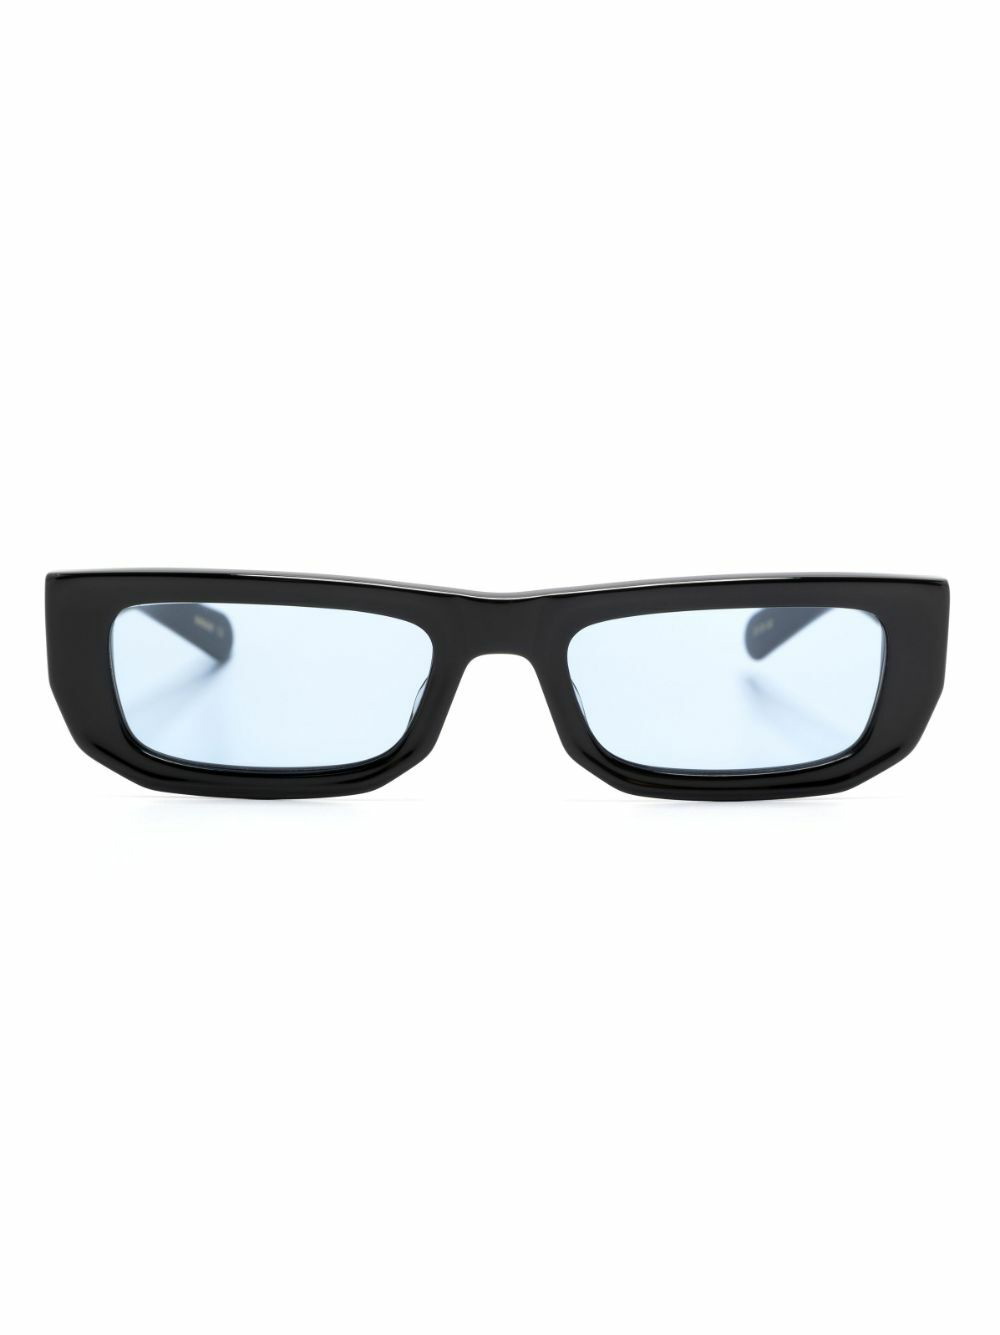 FLATLIST - Bricktop Sunglasses FLATLIST